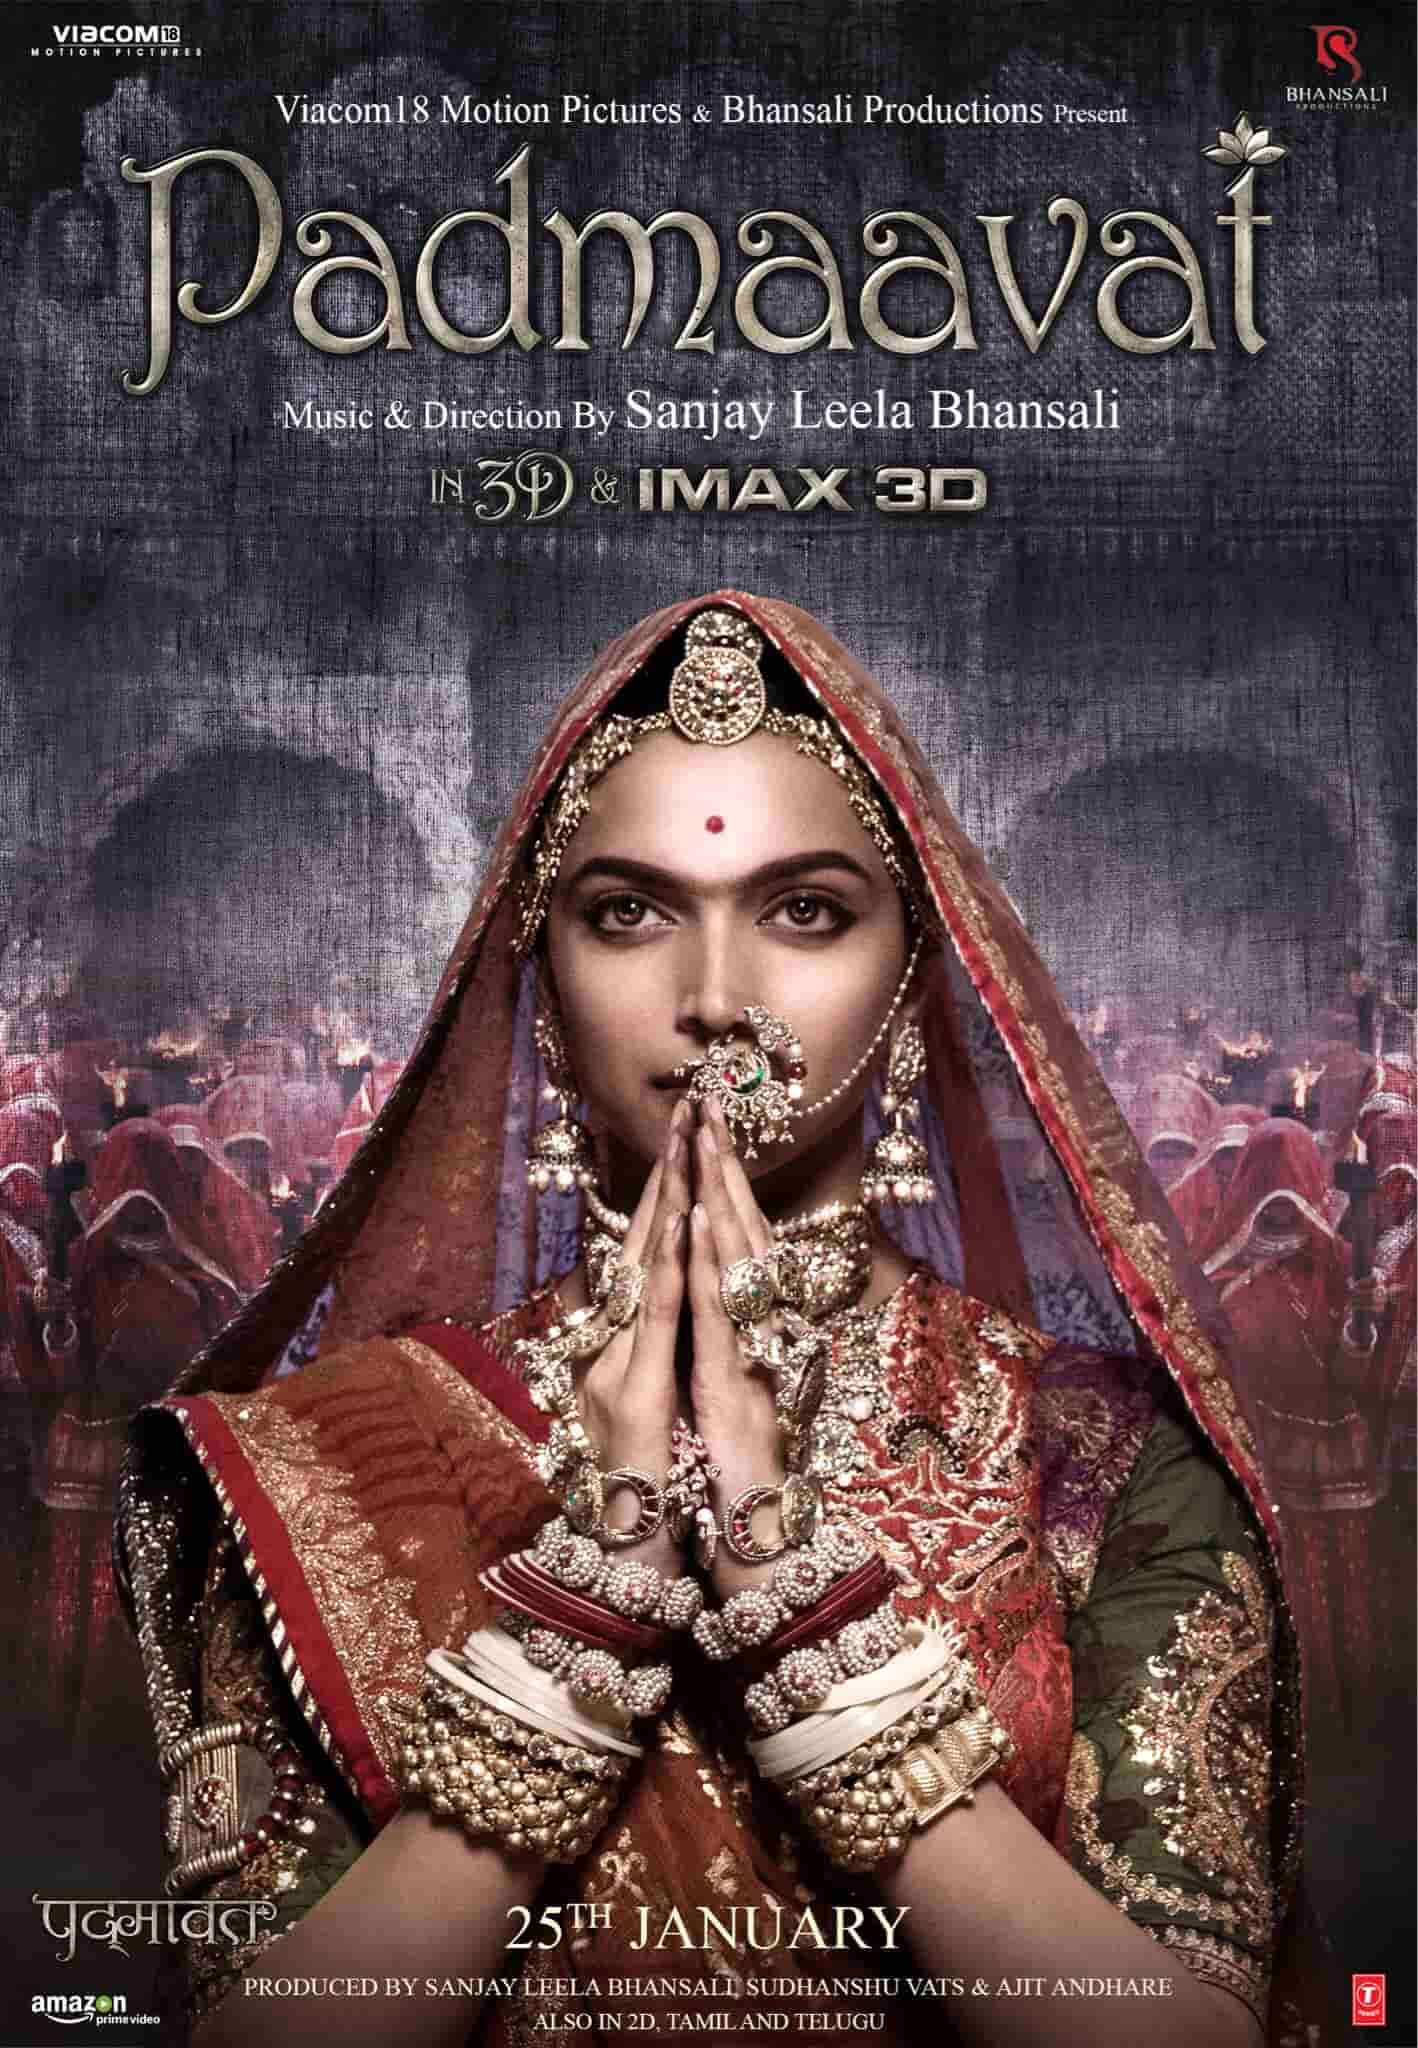 Must Watch Bollywood Movie: Padmavati